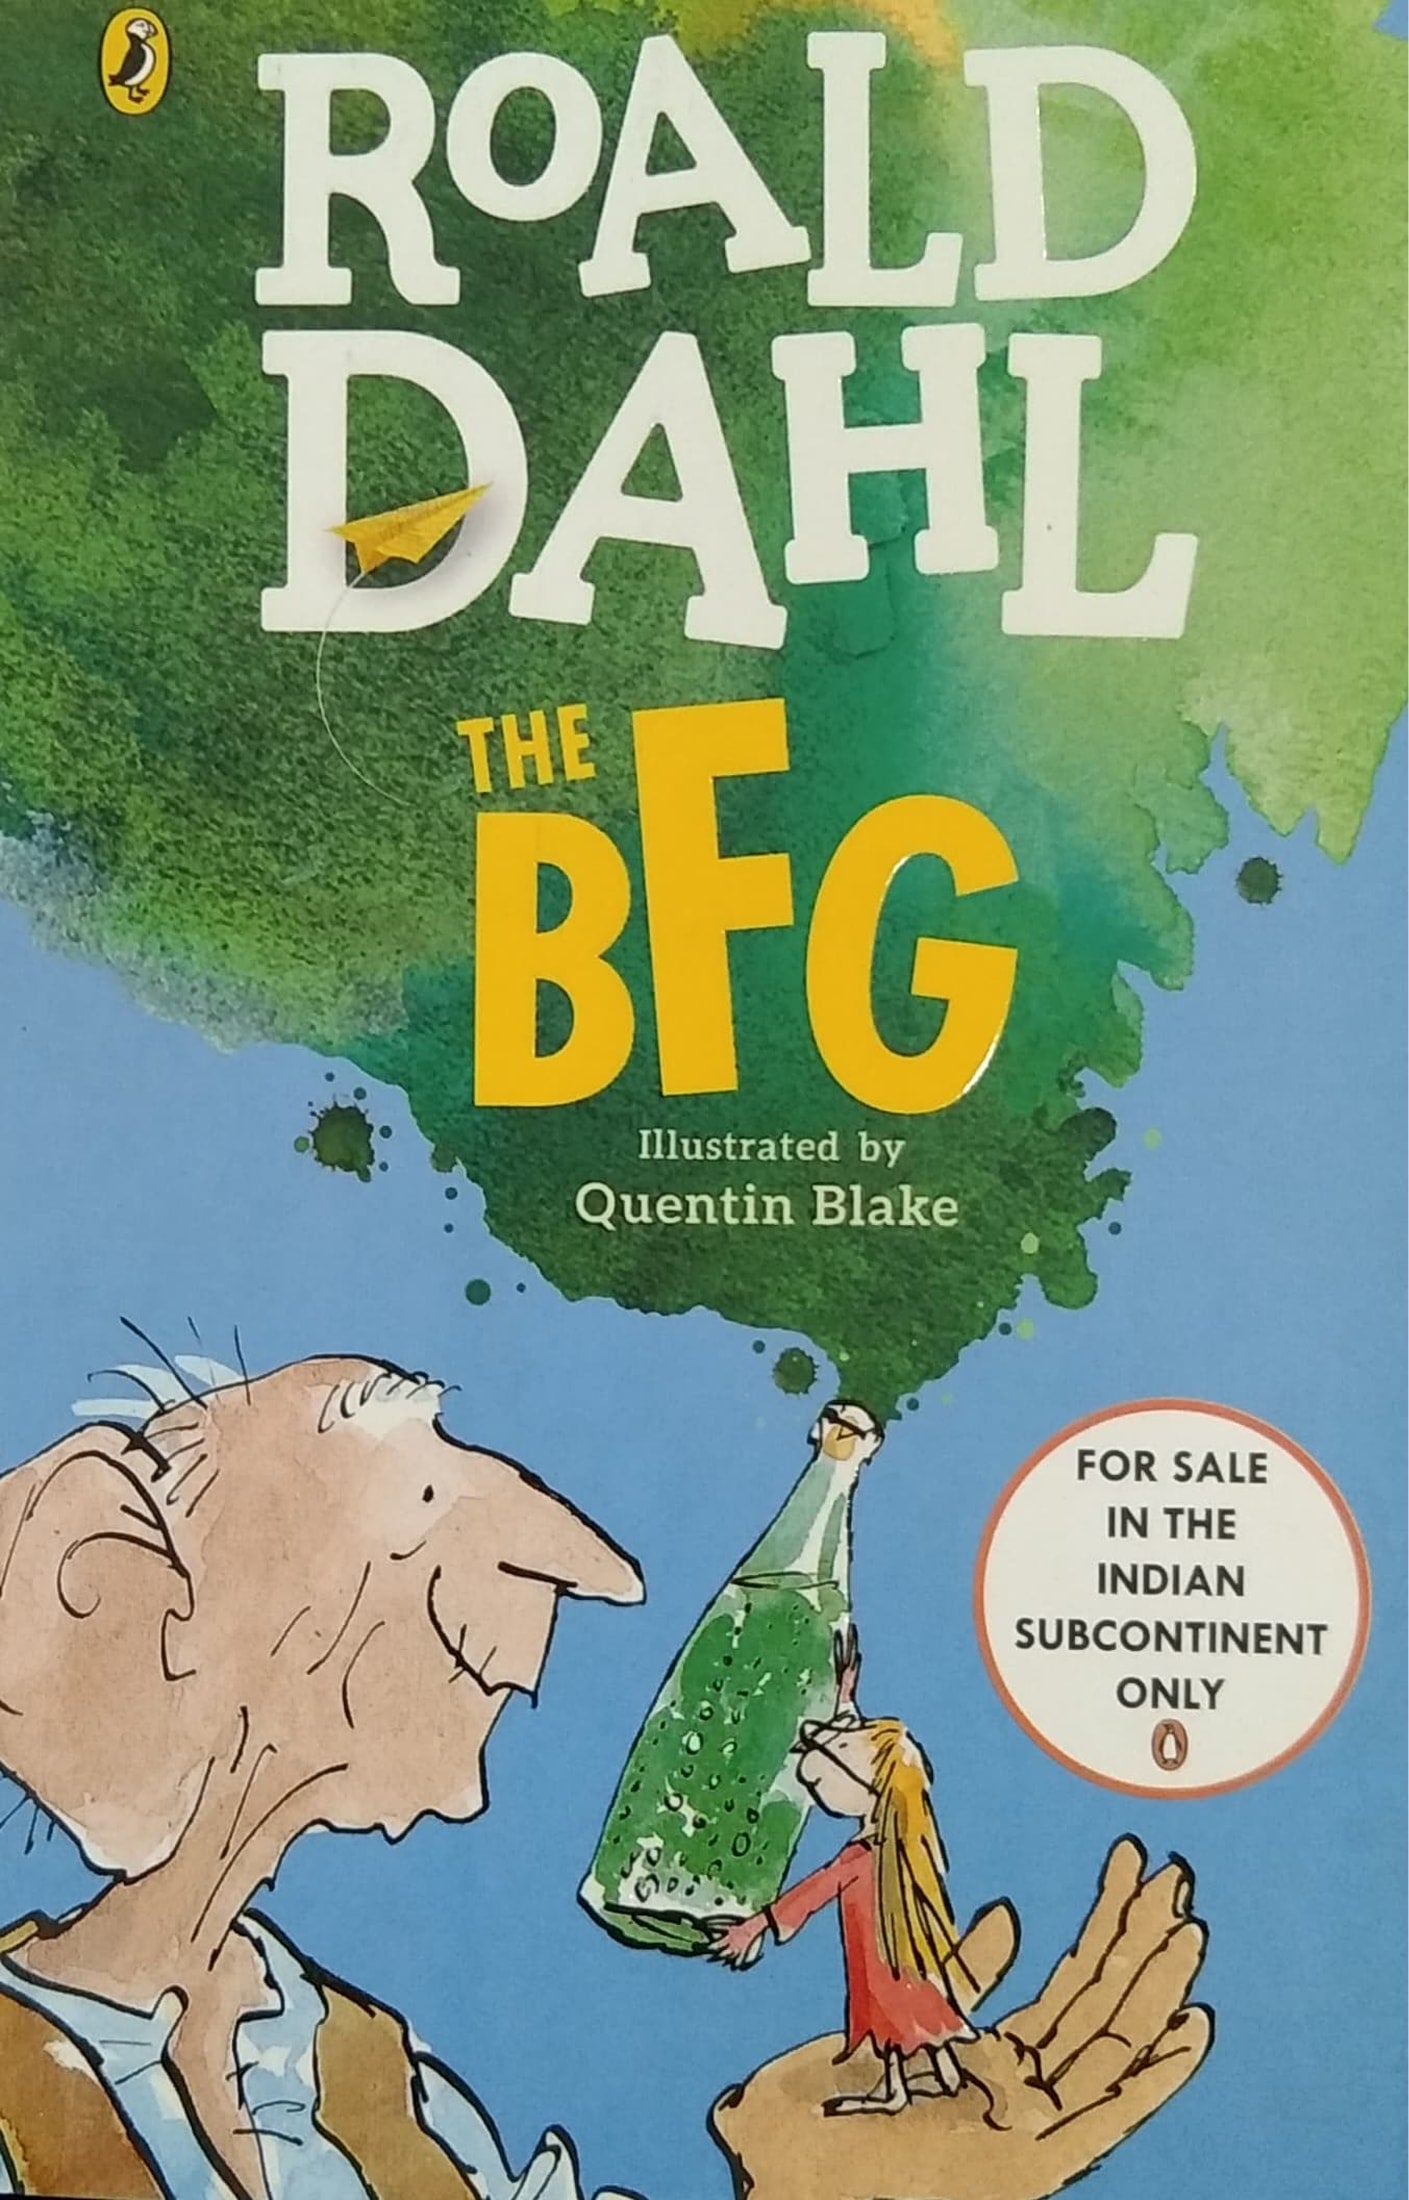 Roald Dahl - THE BFG